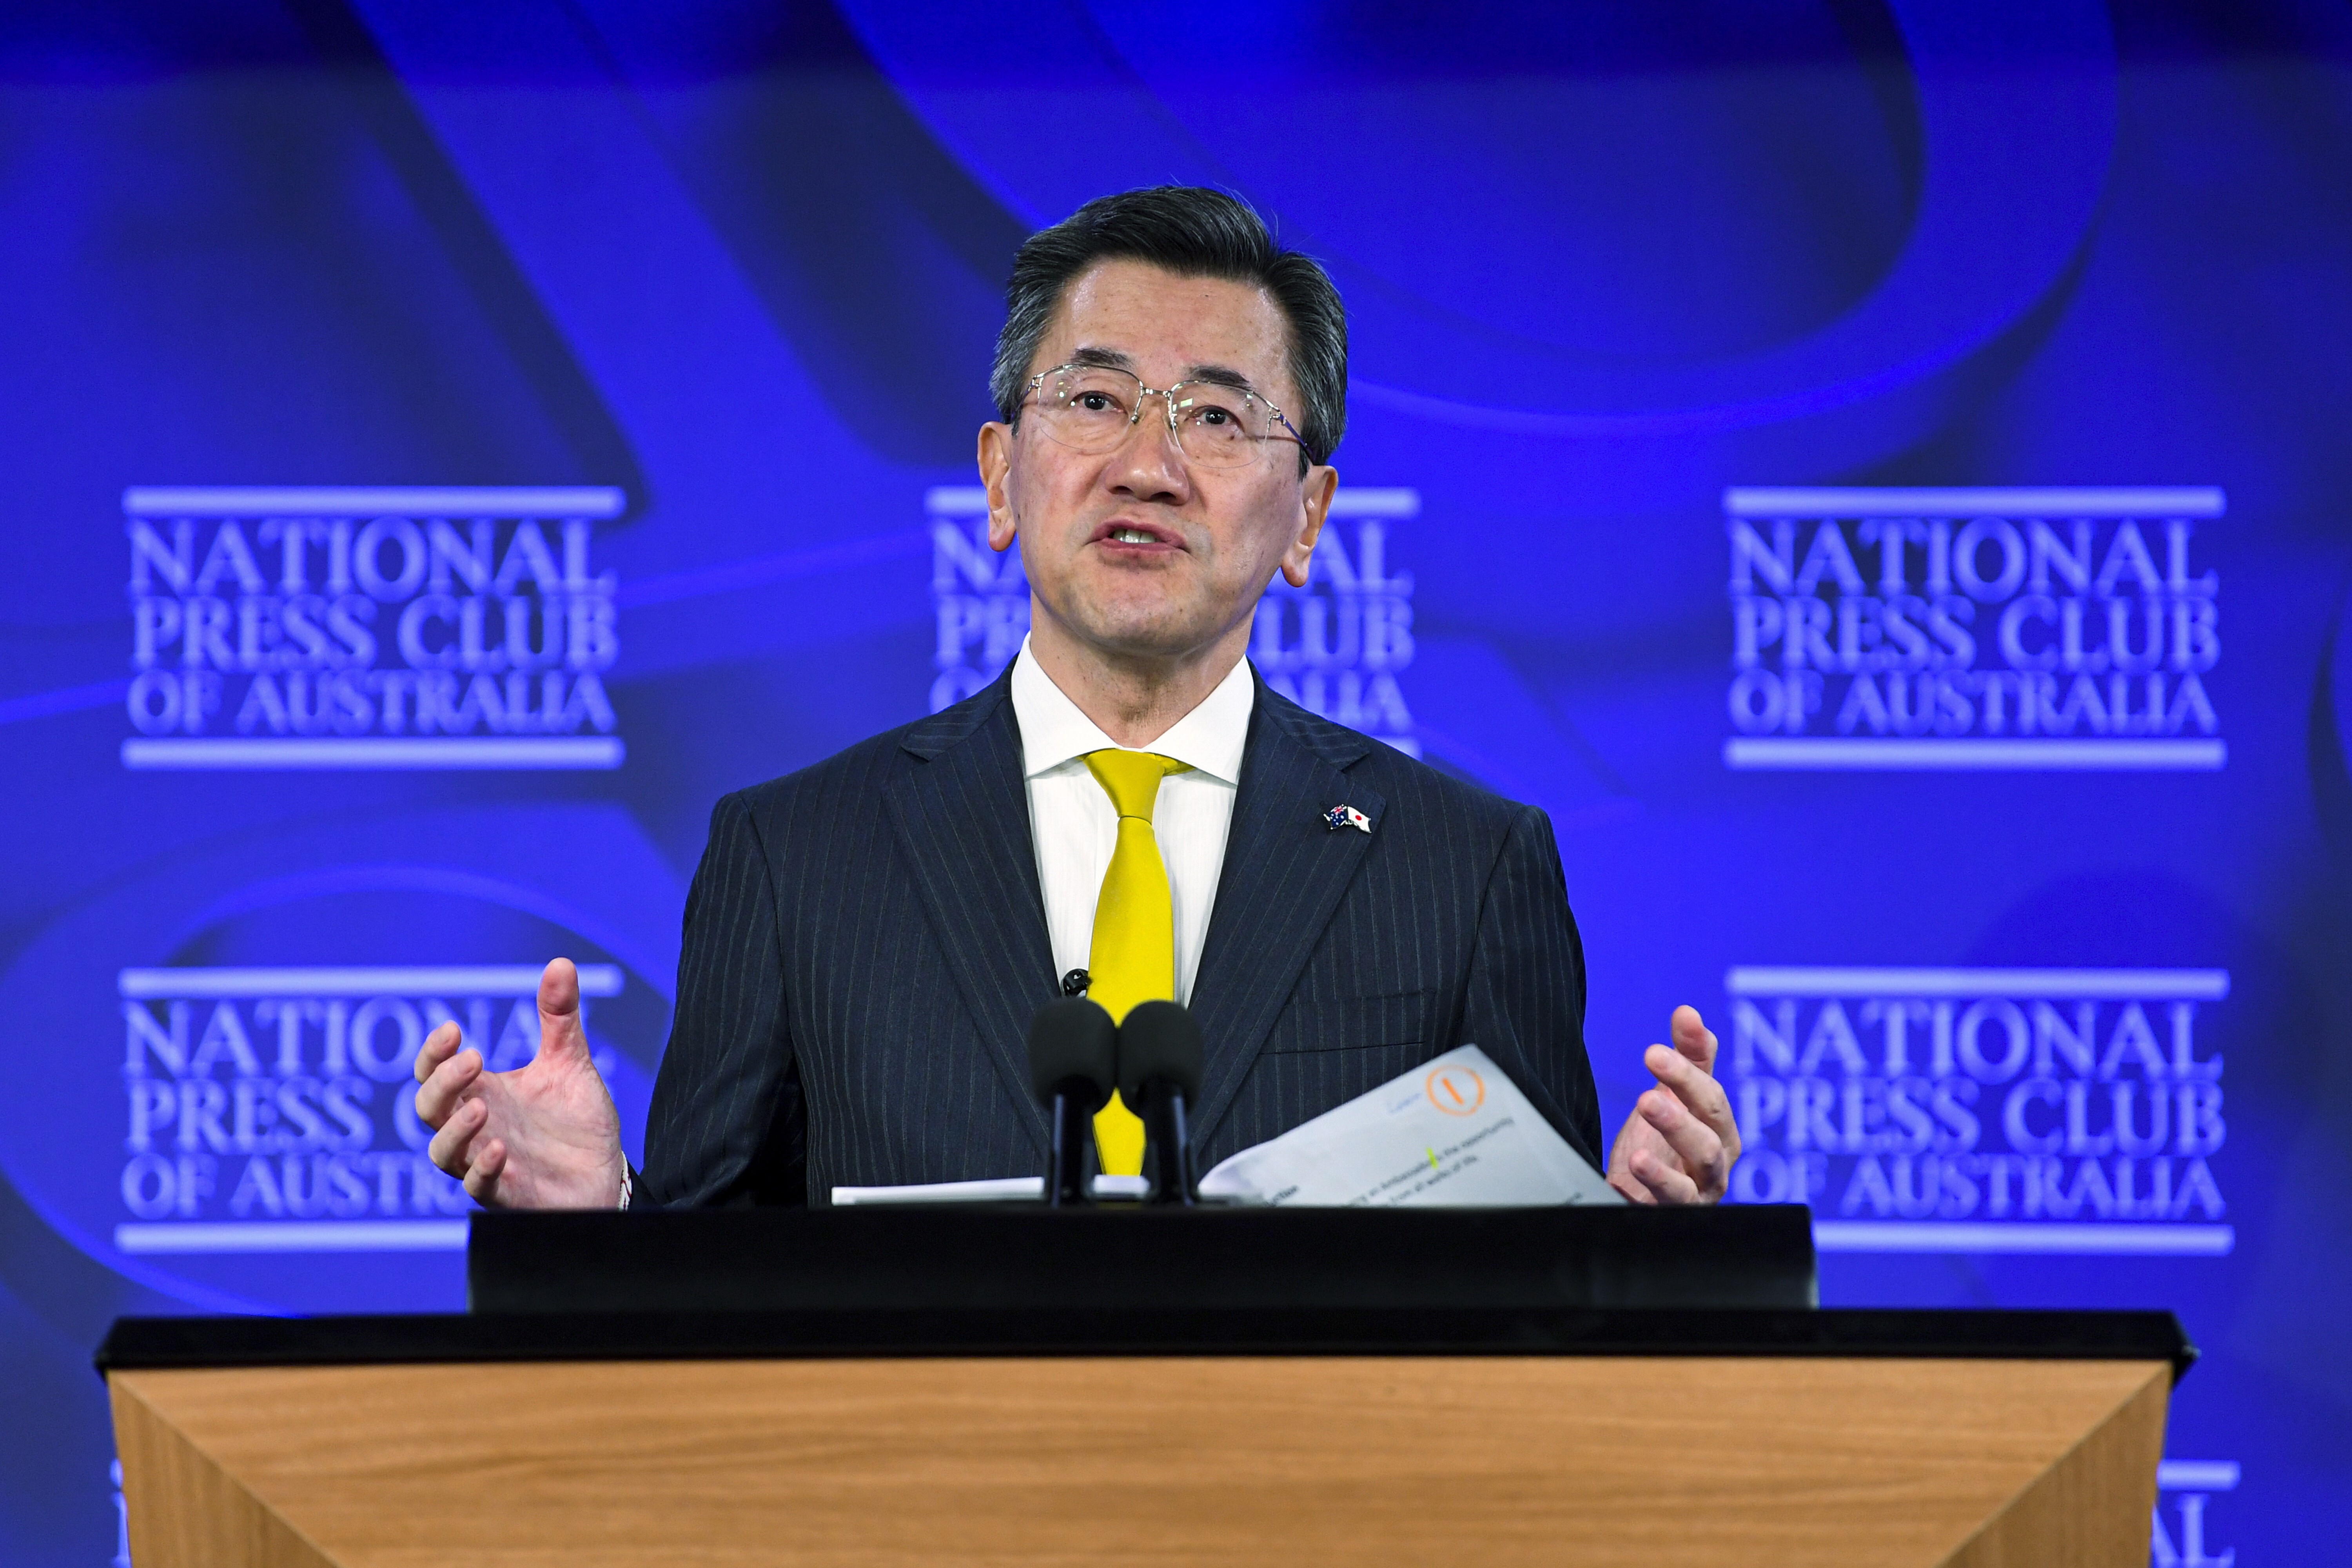 Japan’s ambassador to Australia, Shingo Yamagami, addresses the National Press Club in Canberra, Australia, on July 21. Photo: AP